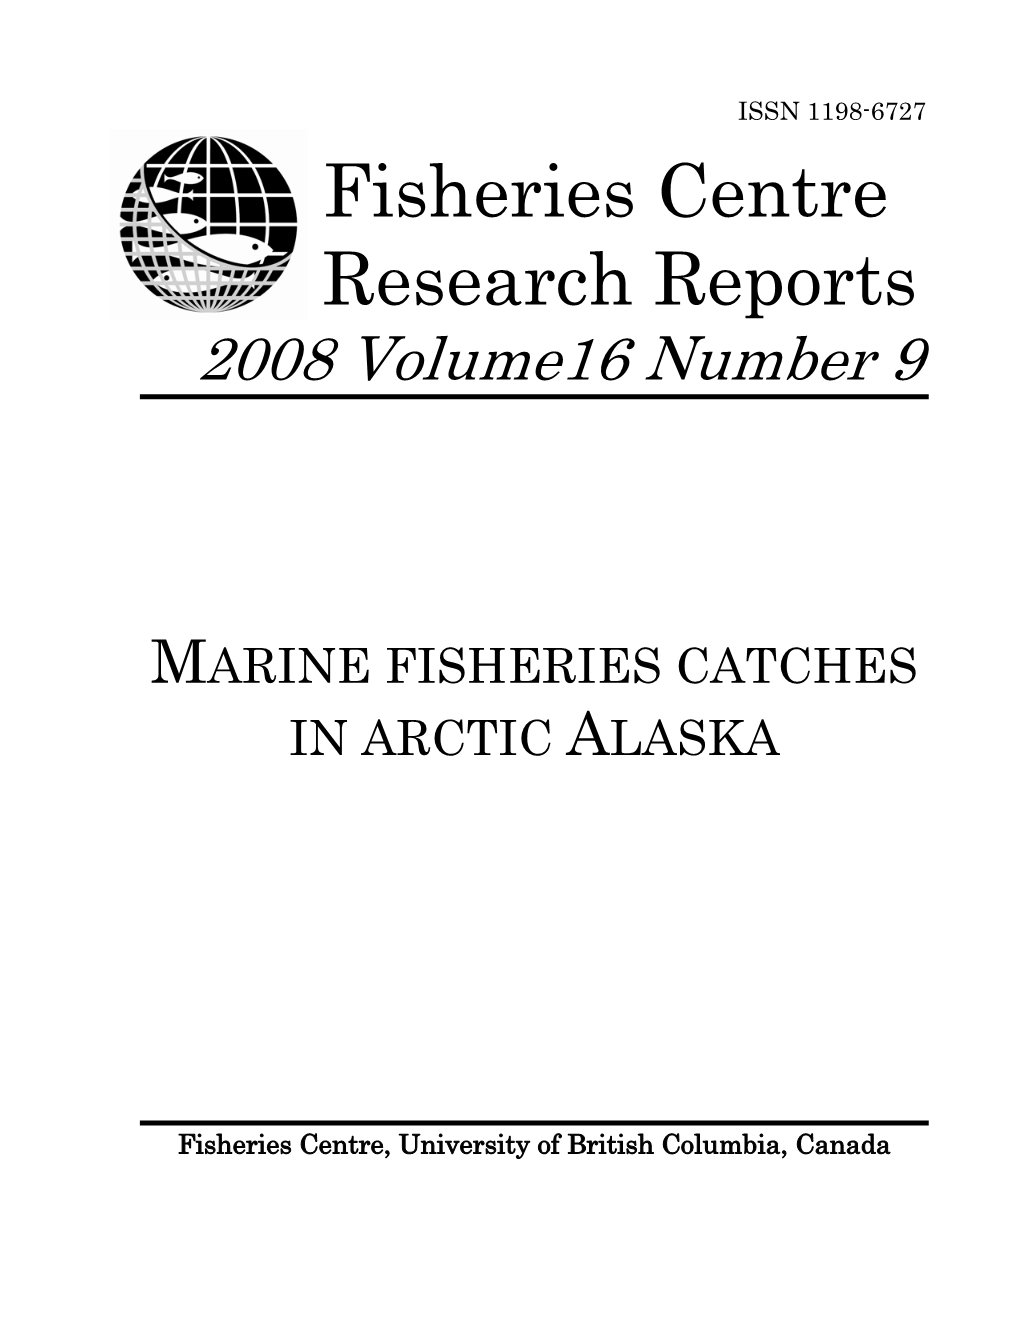 Marine Fisheries Catches in Arctic Alaska